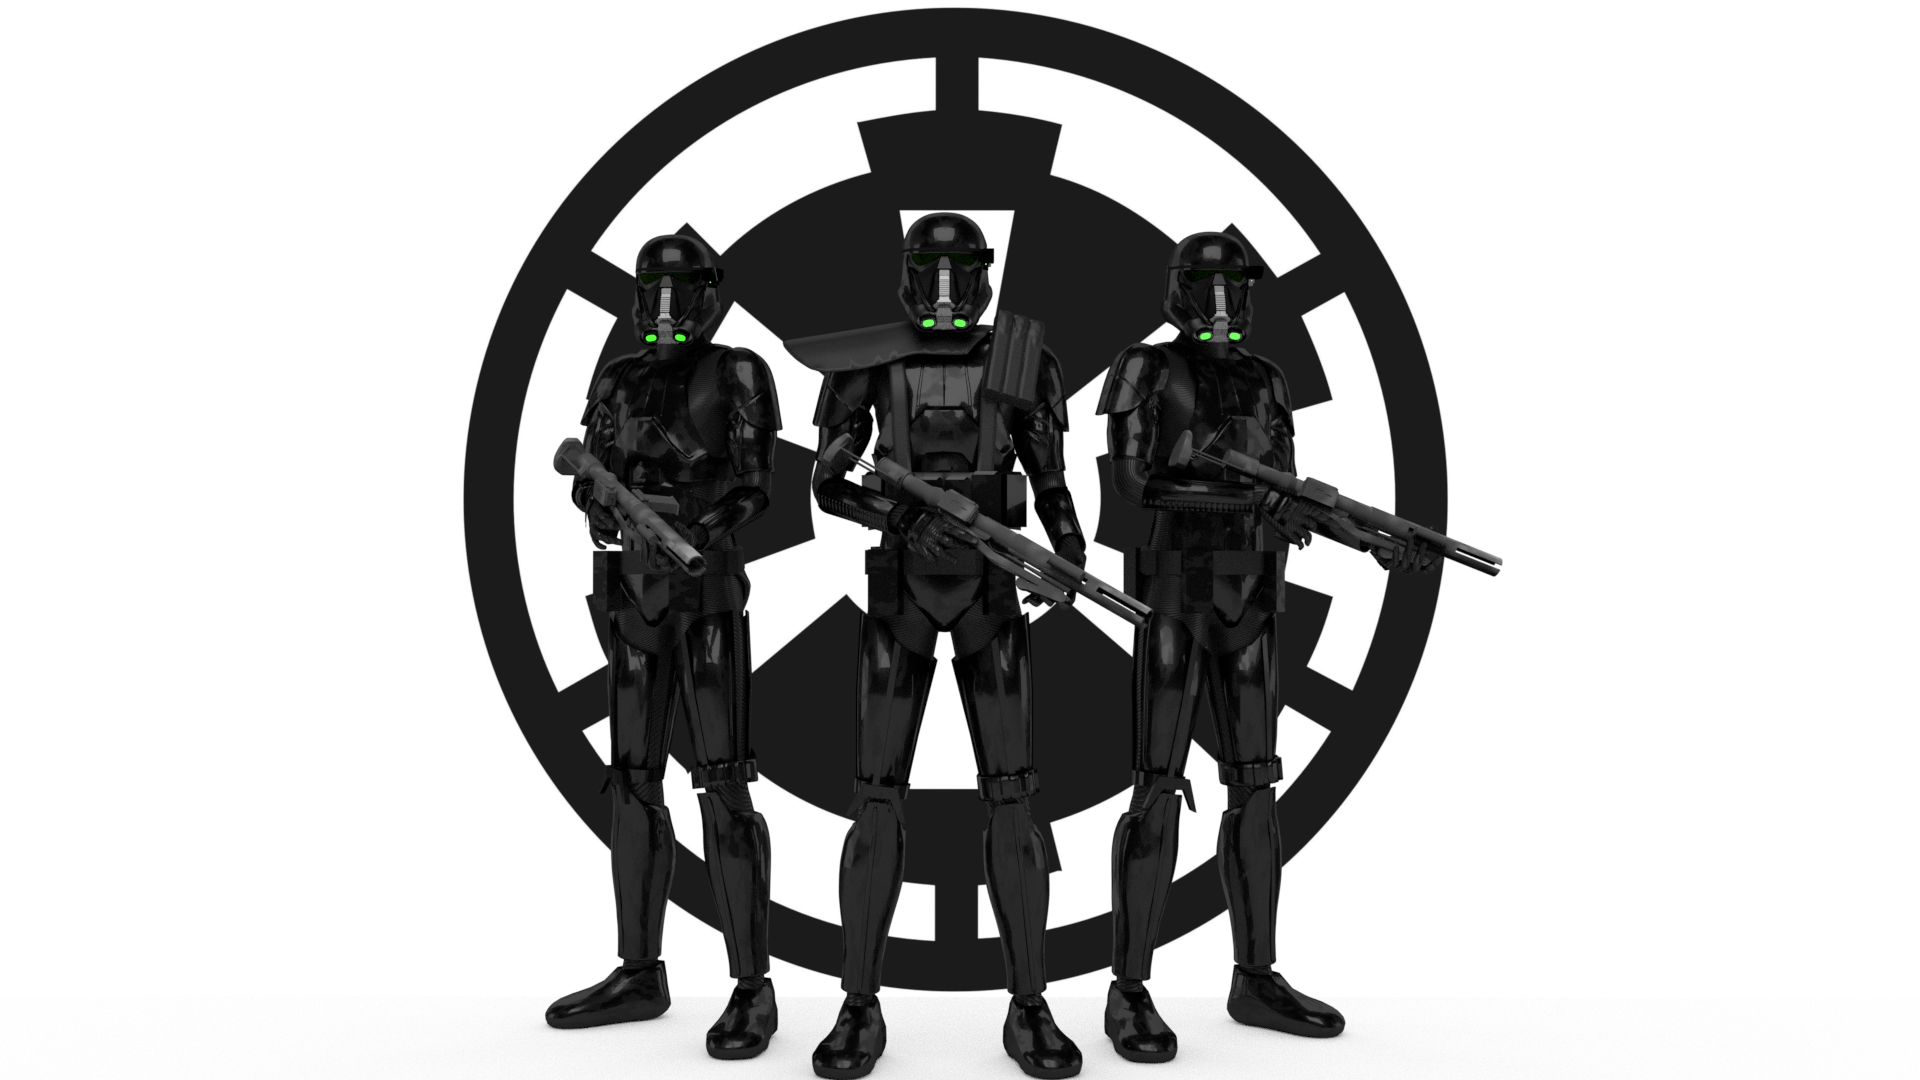 the TDE {The Death Empire} logo - Roblox Photo (37409973) - Fanpop